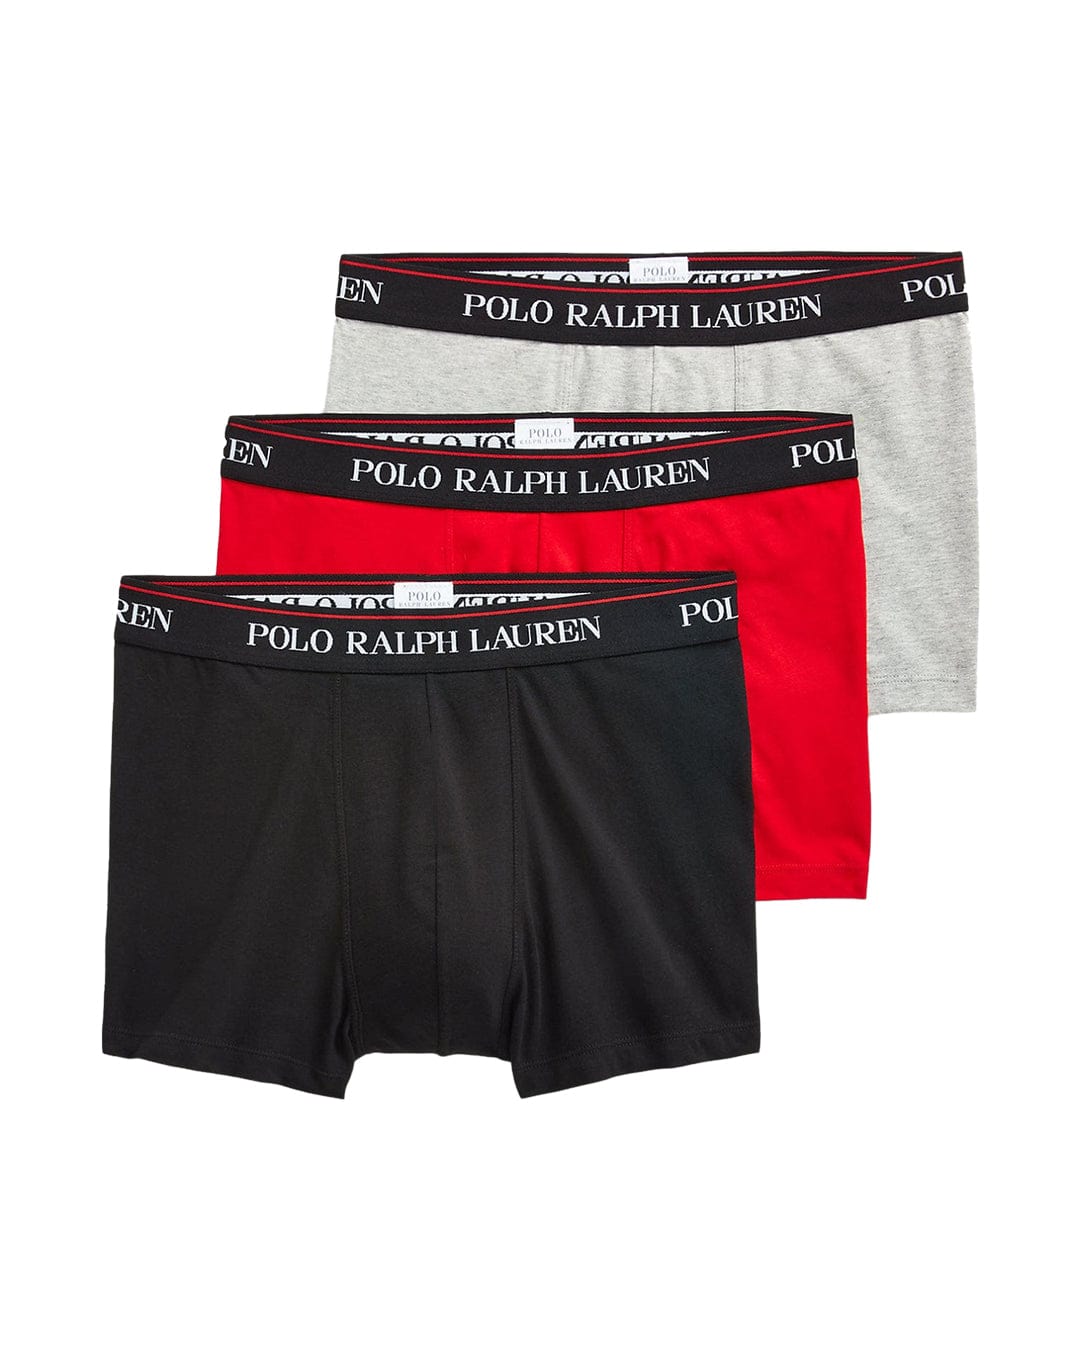 Polo Ralph Lauren Underwear Polo Ralph Lauren Grey, Red And Black Three-Pack Trunks